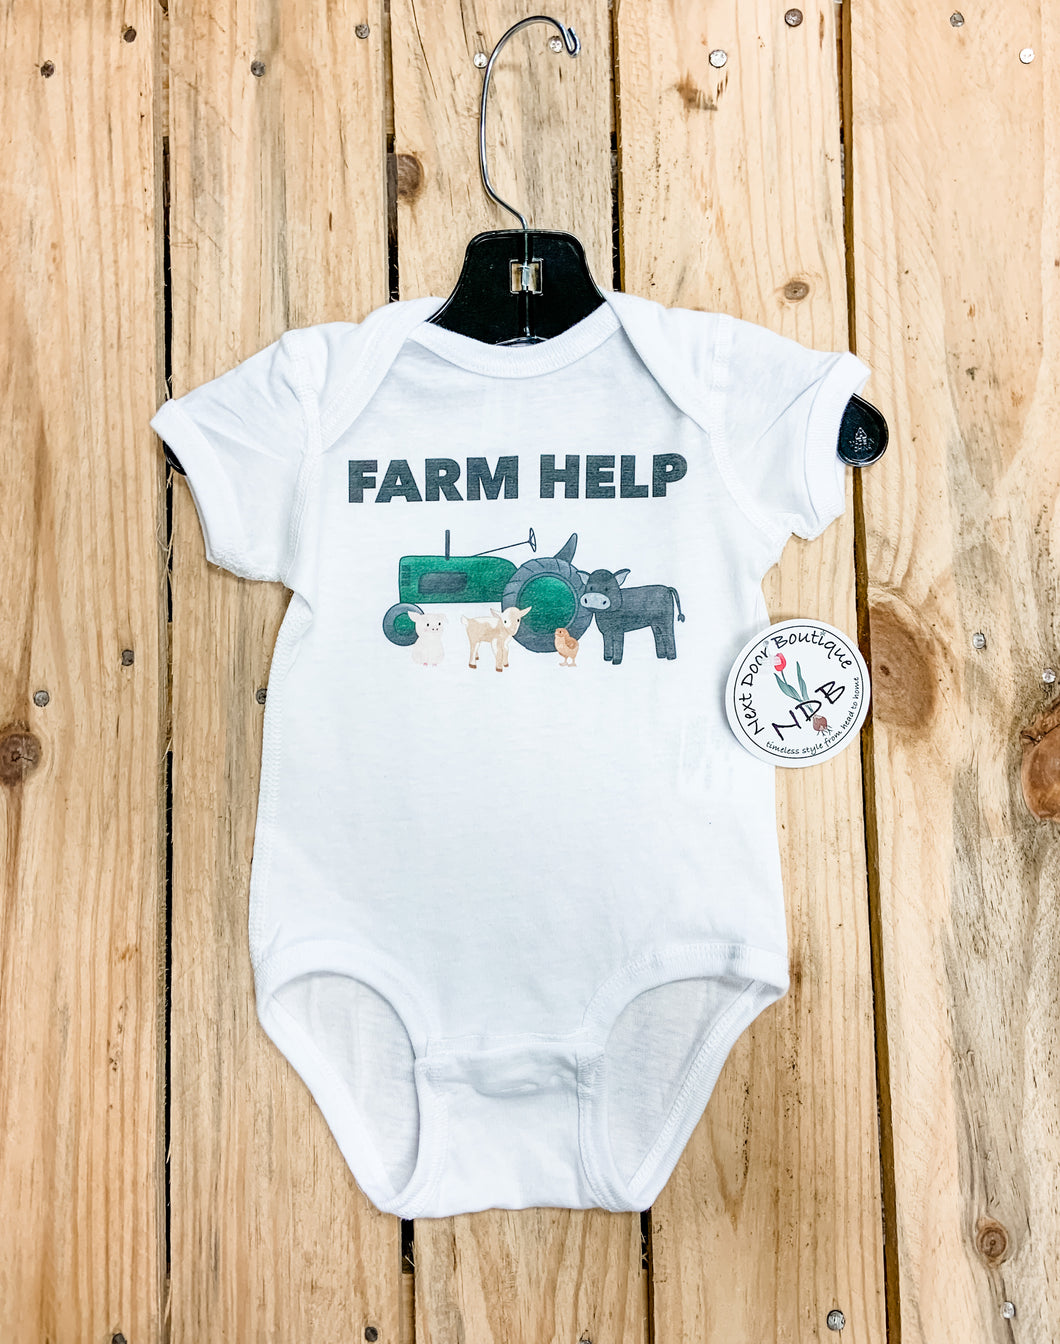 Farm Help (green)